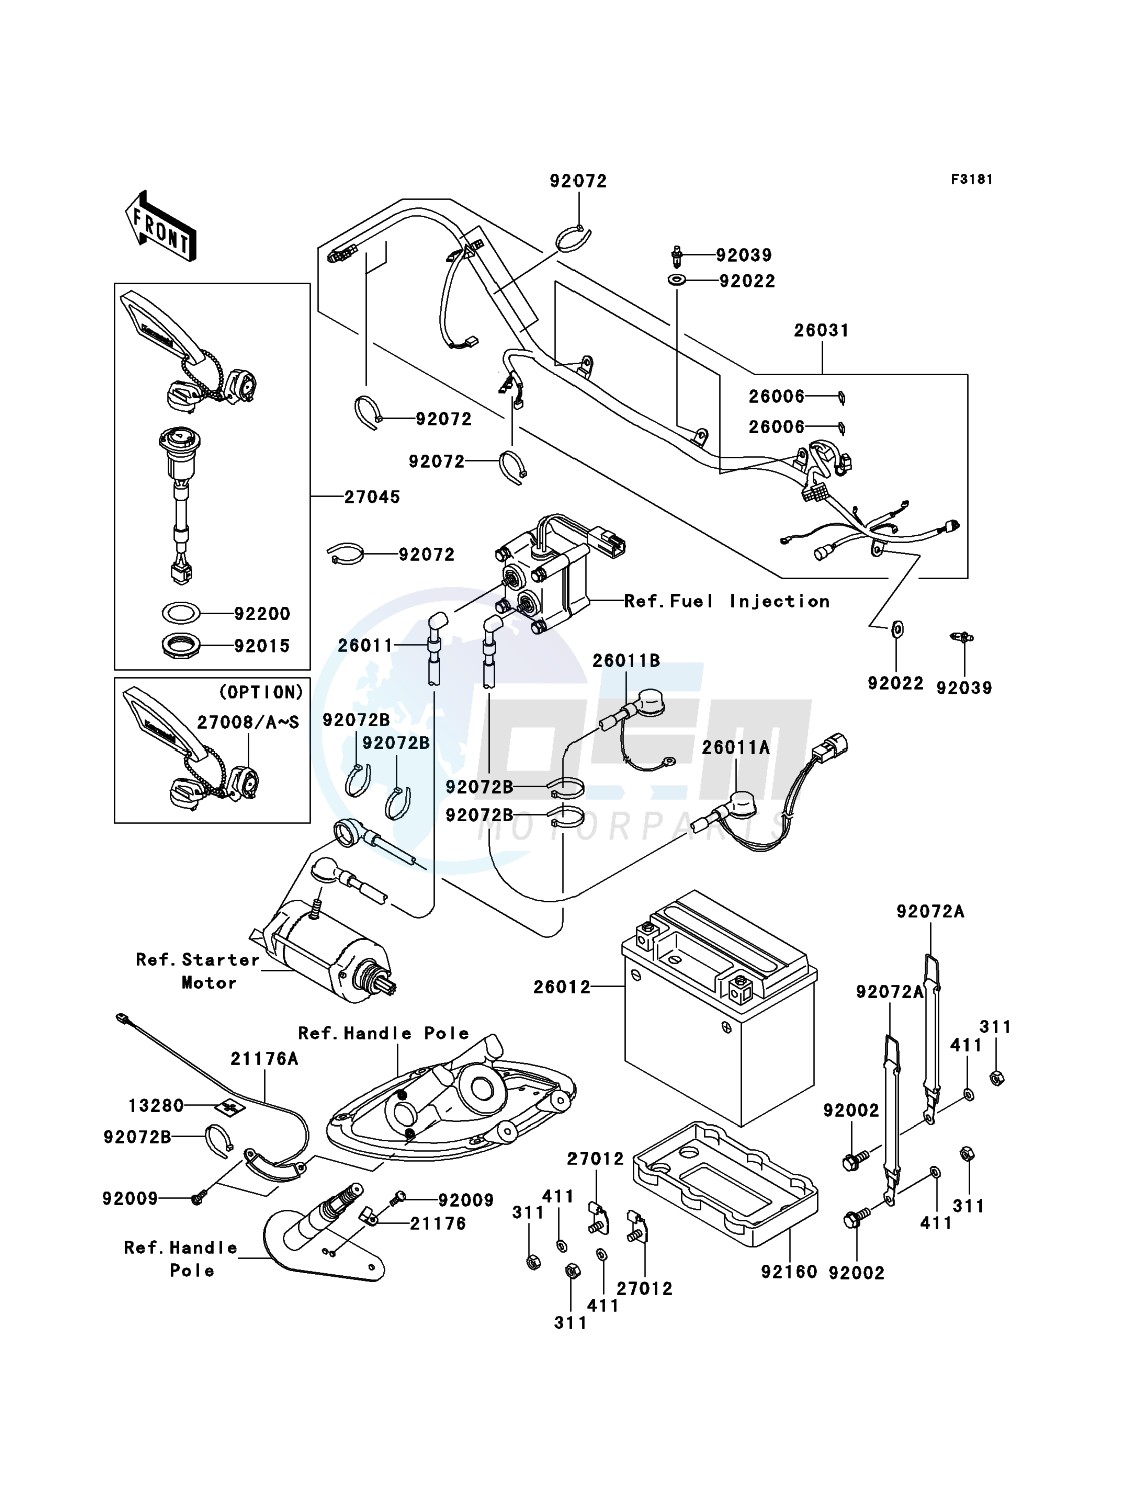 Electrical Equipment blueprint